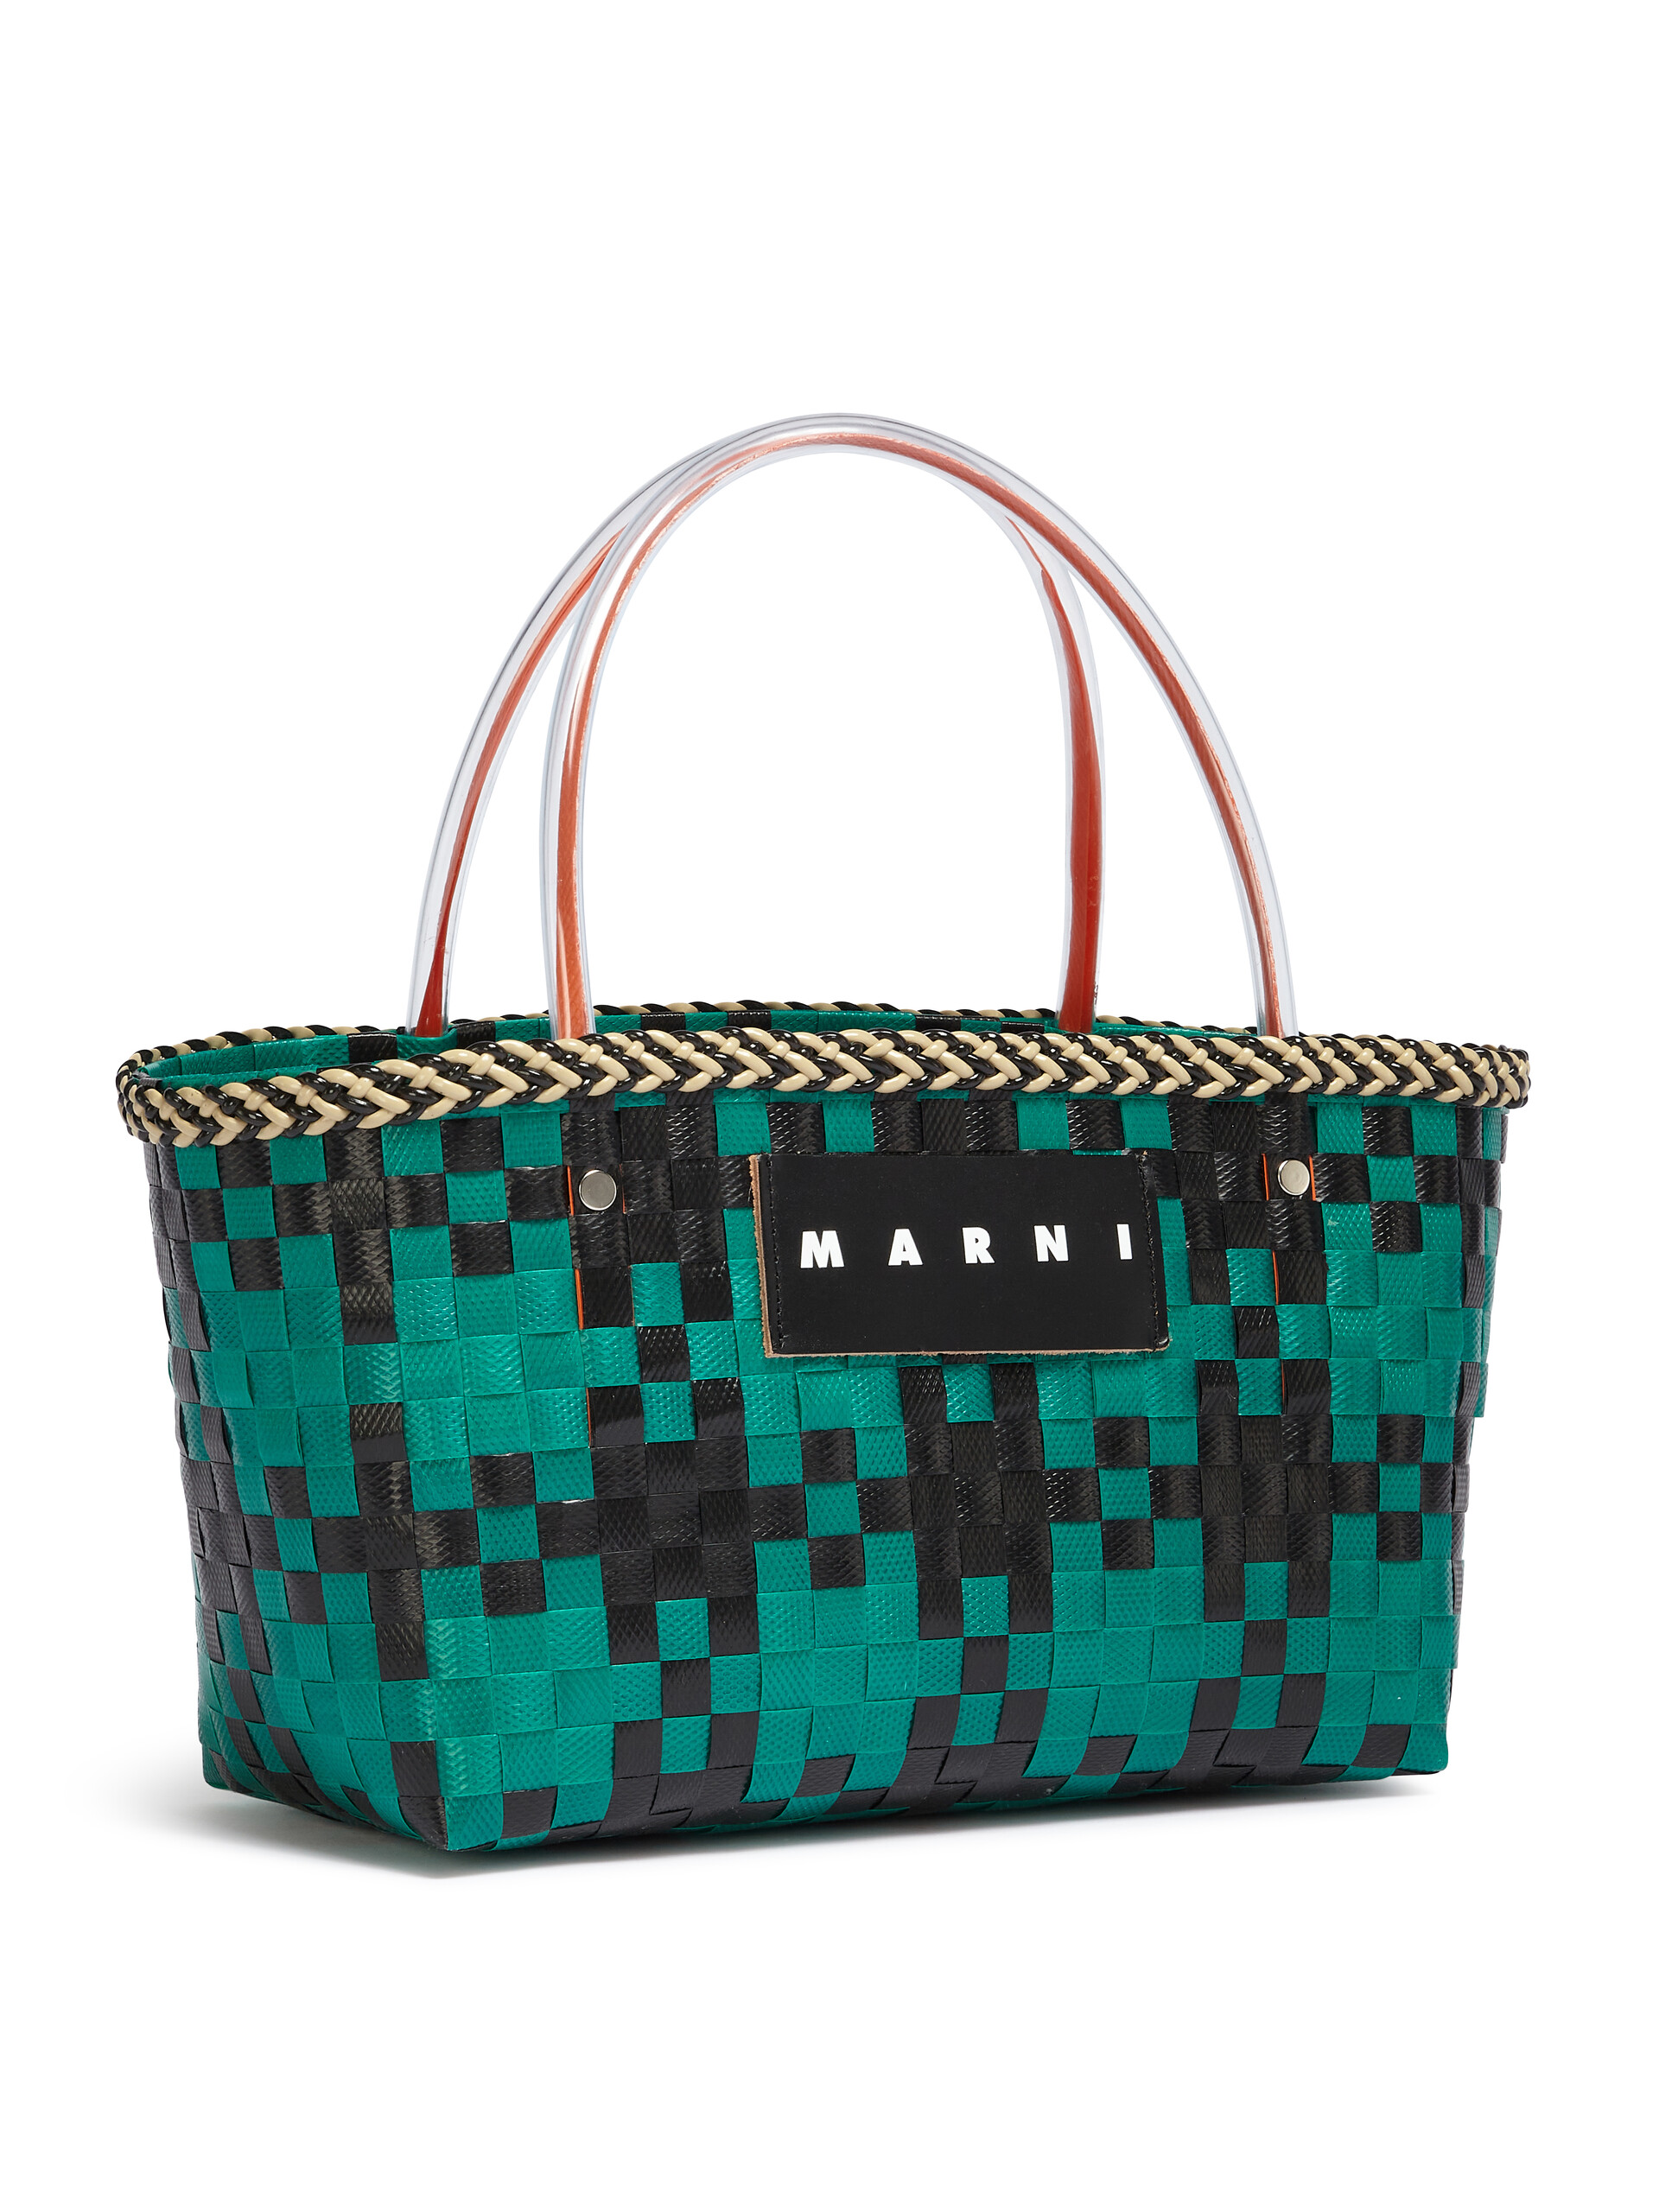 MARNI MARKET CHECK BAG in black and green tartan woven material - Shopping Bags - Image 4